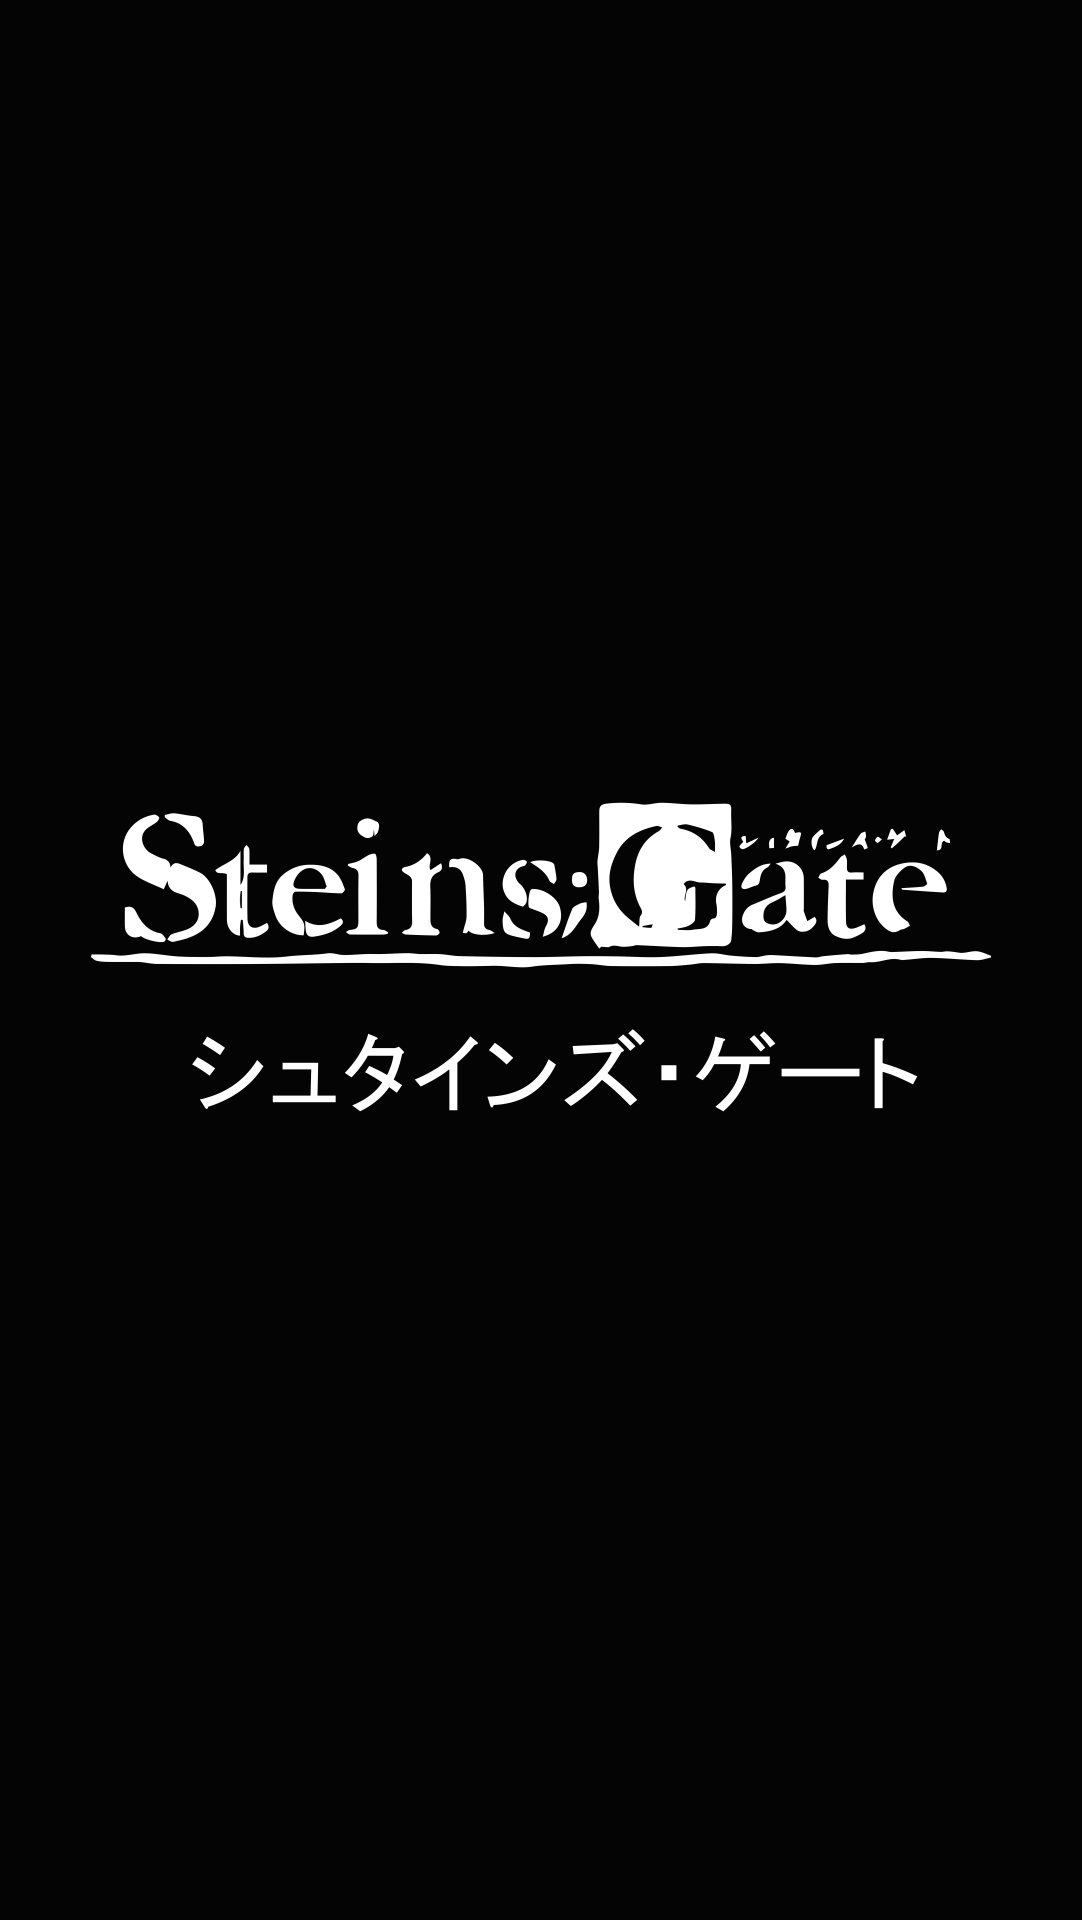 Yaneno Steins Gate Mobile Wallpaper Do Not Remove Text